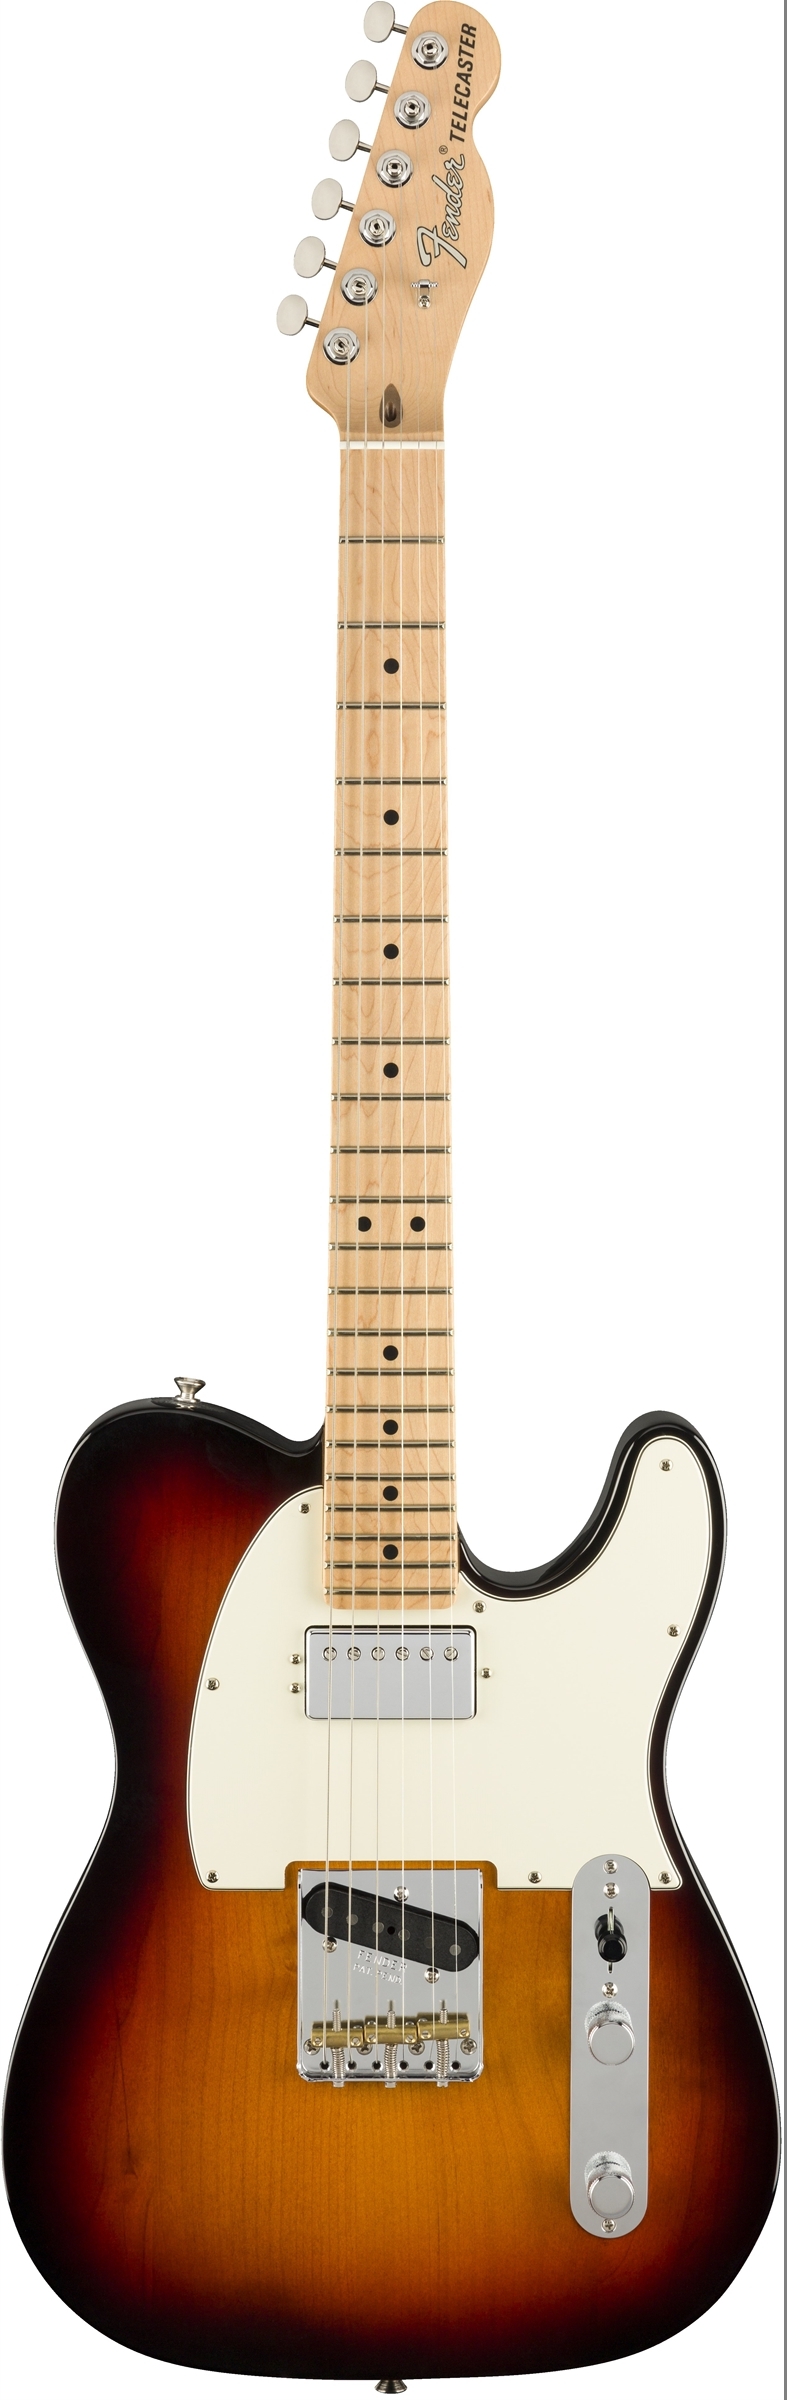 Fender American Performer Telecaster Humbucker 3 colors sunburst